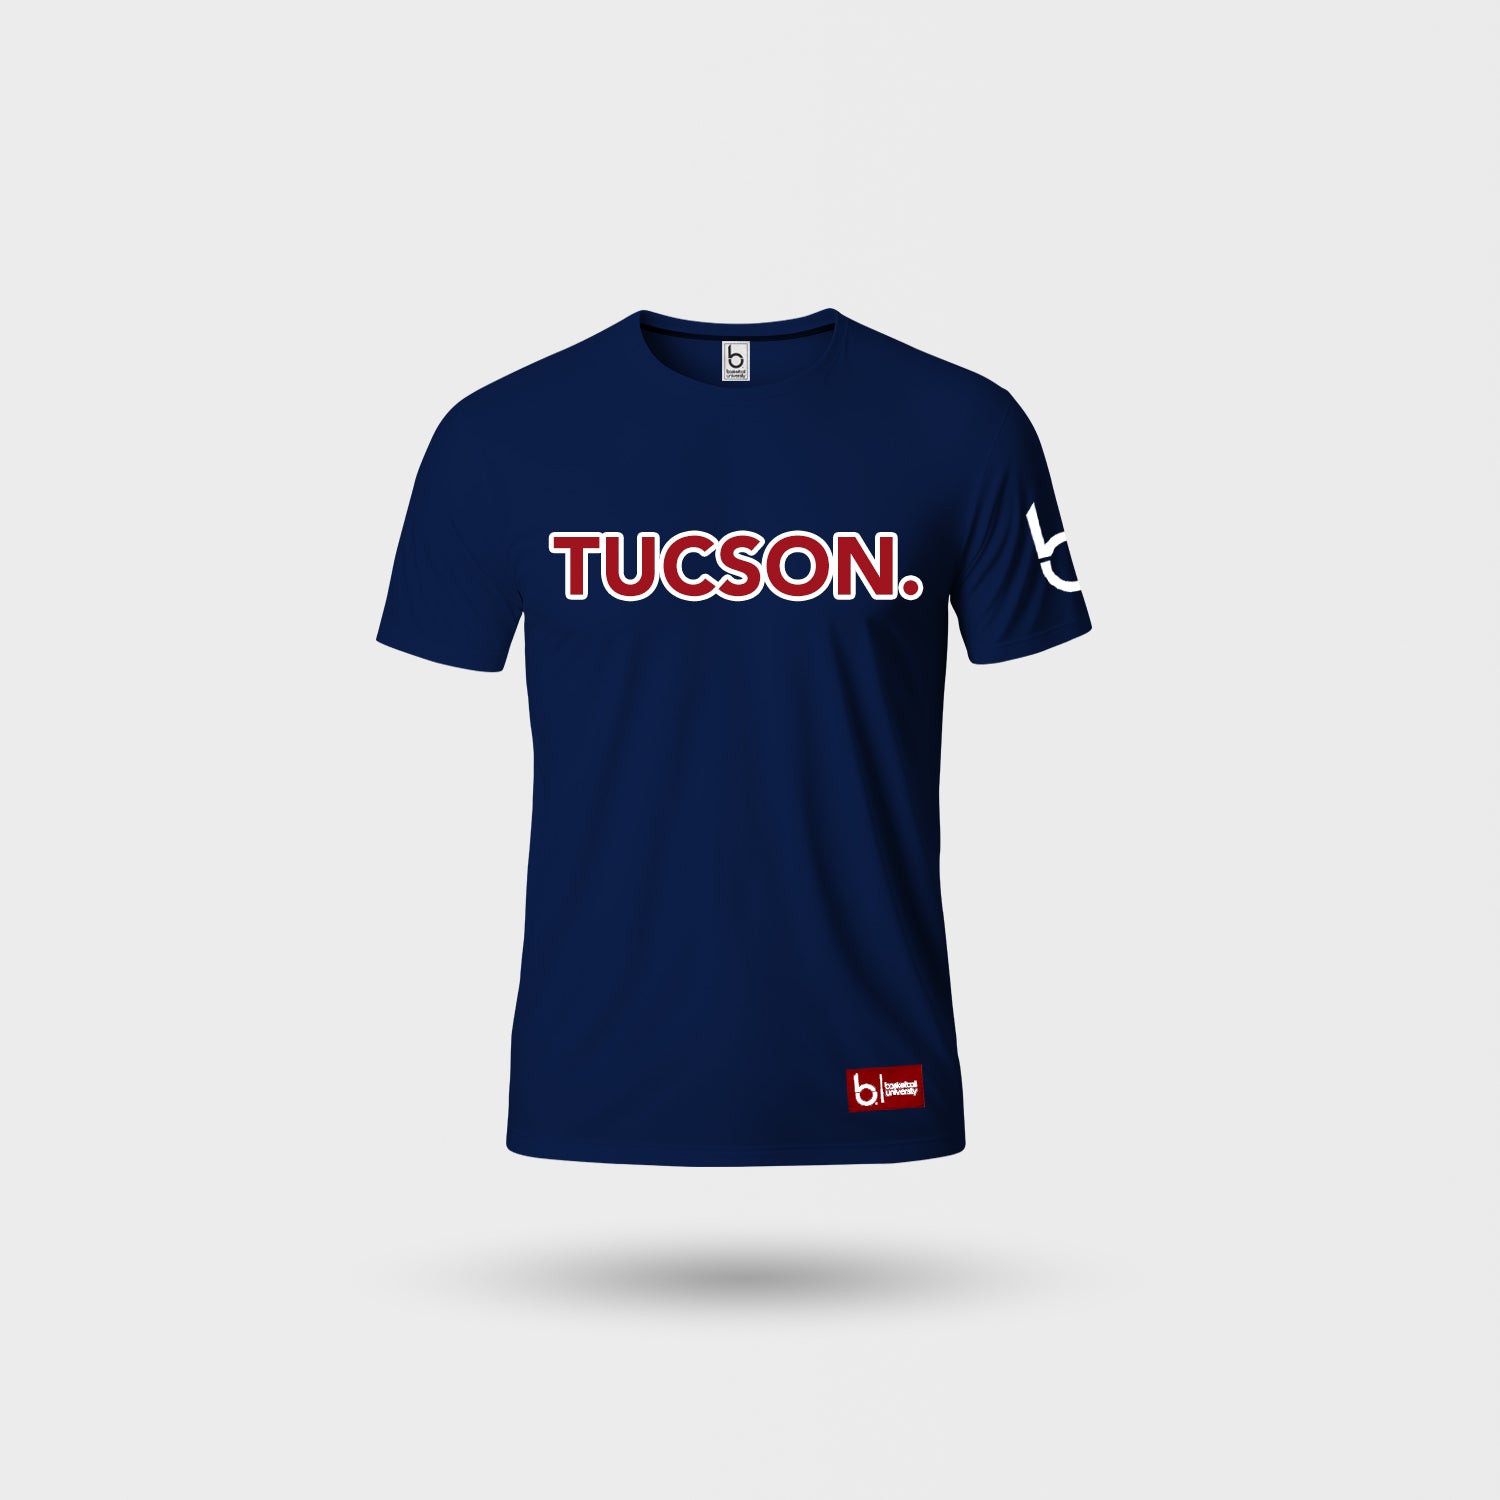 Tucson - Hoop City T-Shirt